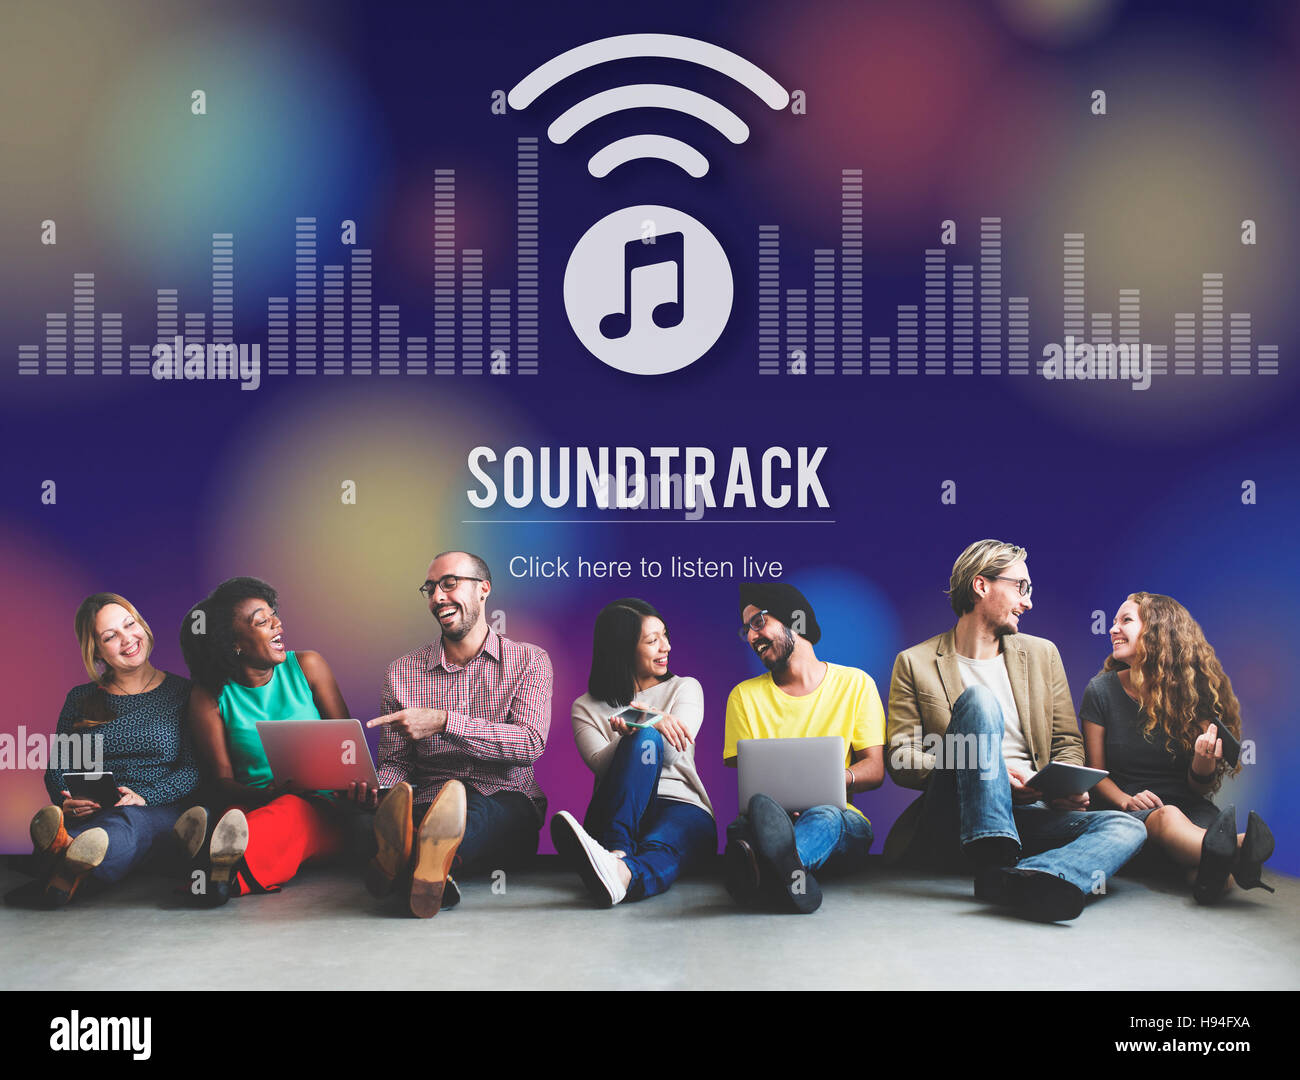 Soundtrack Audio Design Display Electronic Music Concept Stock Photo